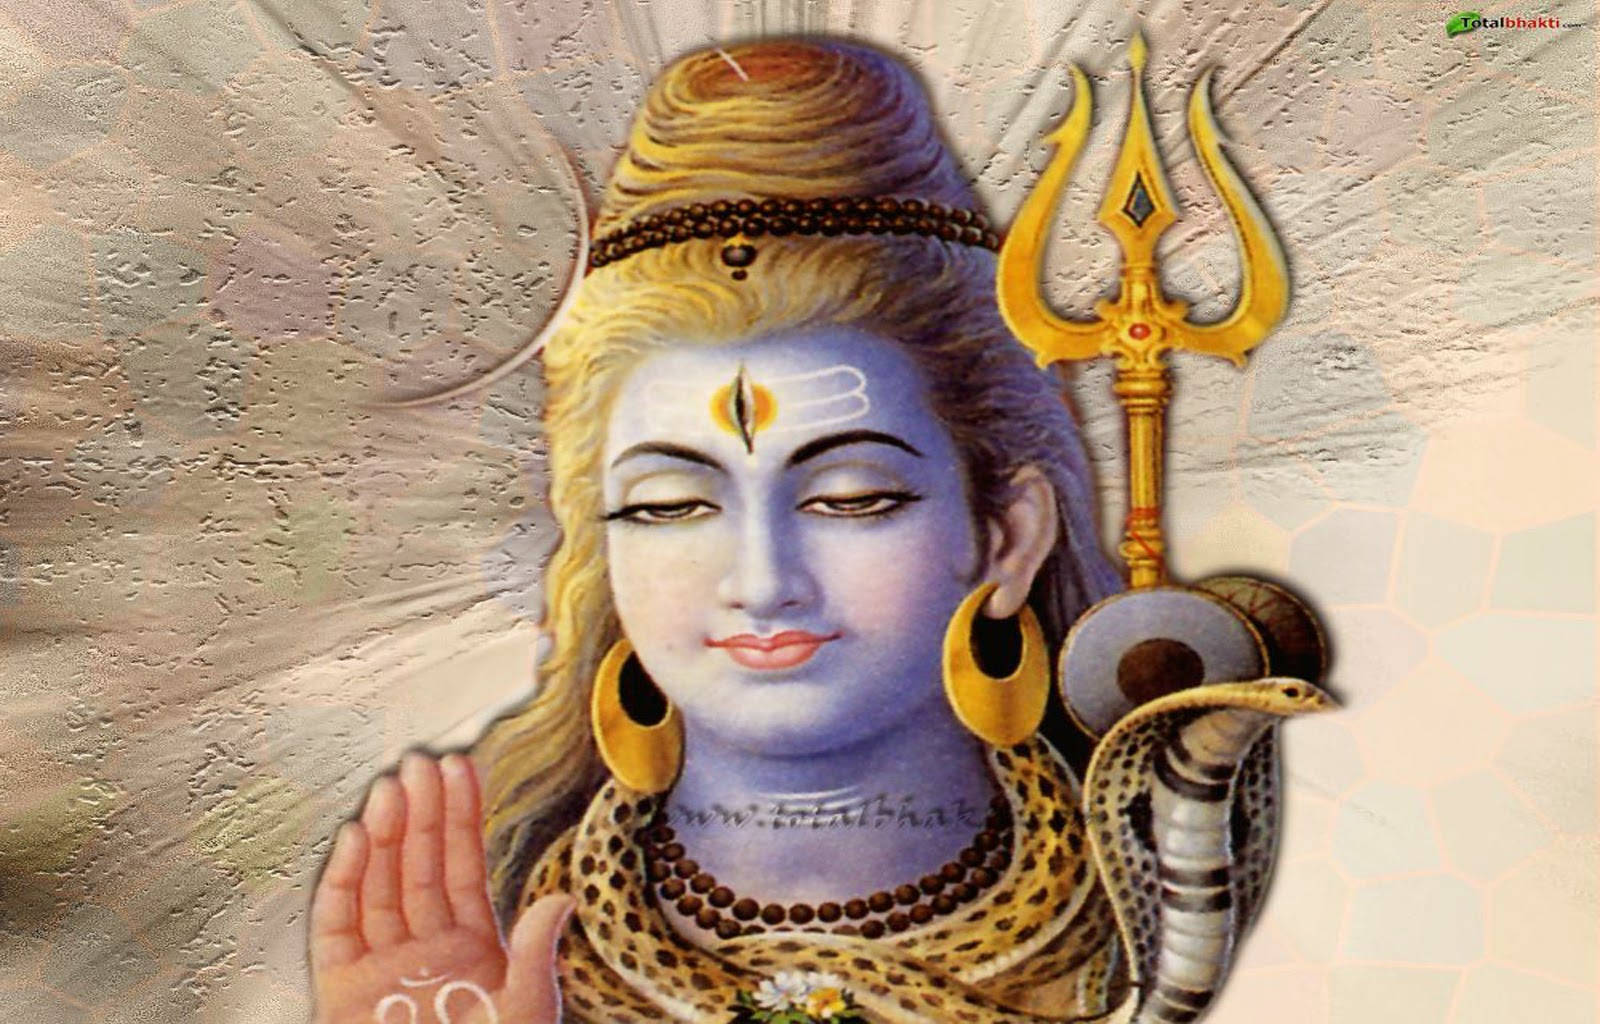 Top 999+ Lord Shiva Wallpaper Full HD, 4K Free to Use